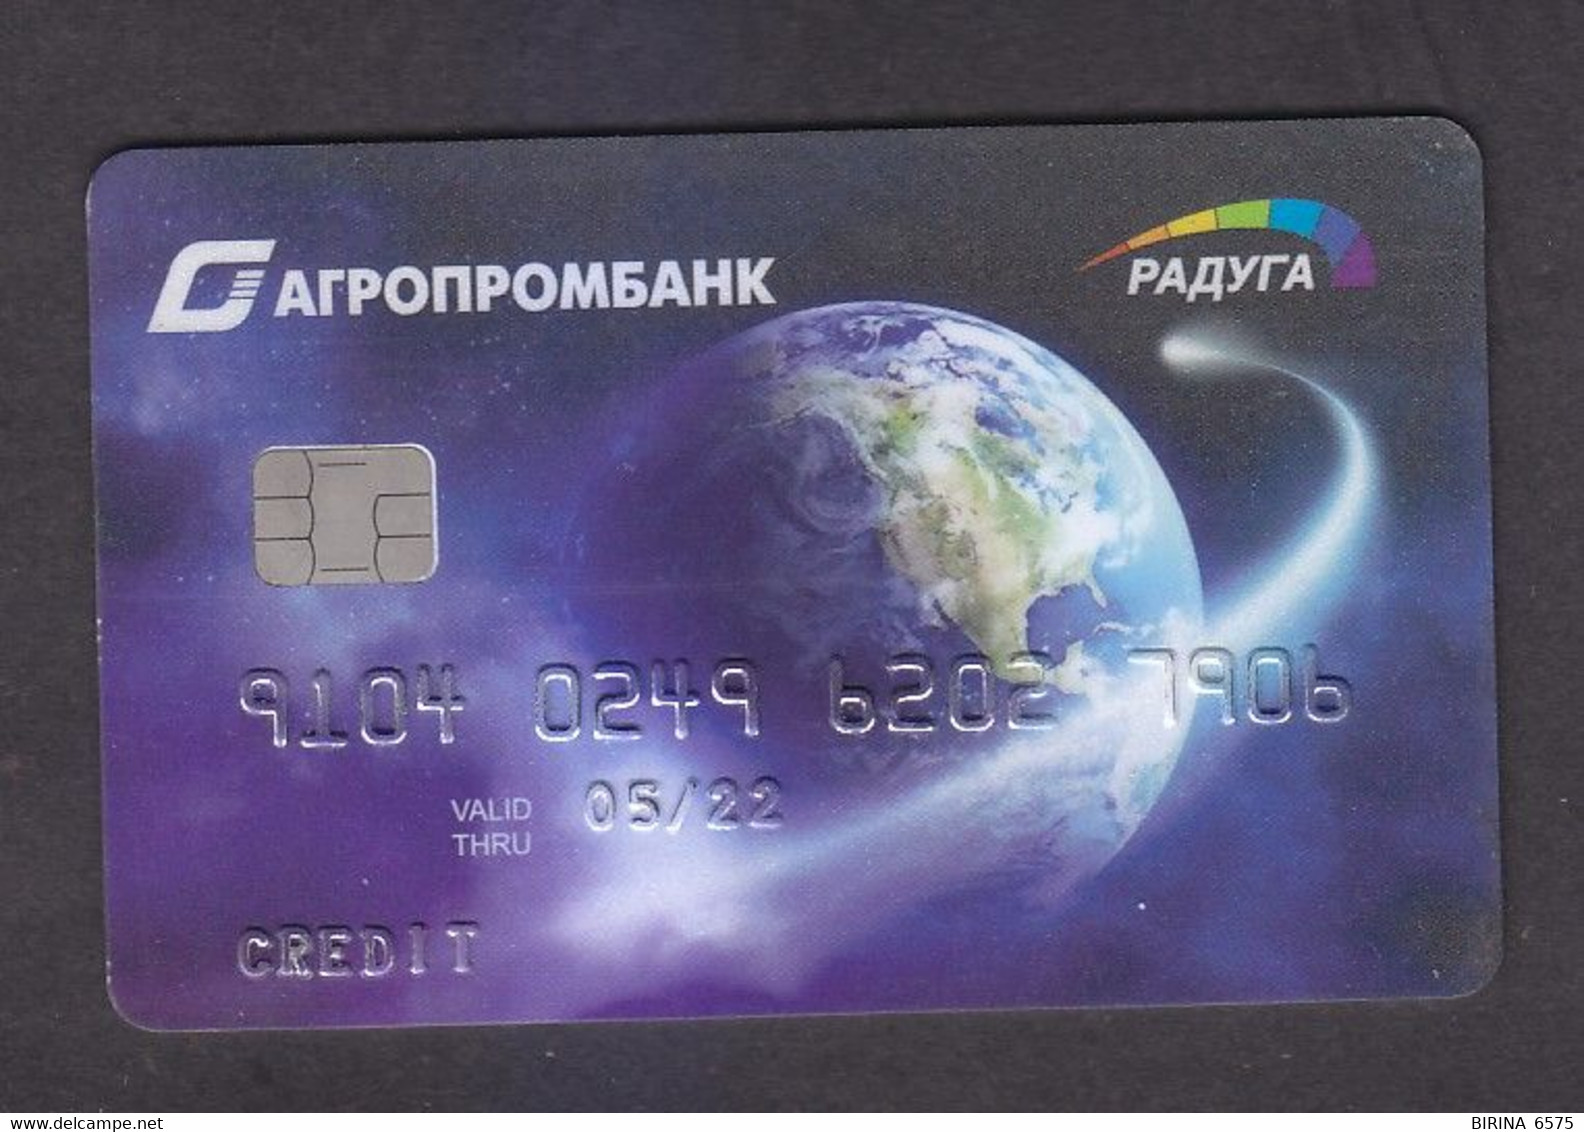 BANK CARD. AGROPROMBANK. MOLDOVA. TRANSNISTRIA.  - 1-5 - Moldawien (Moldau)